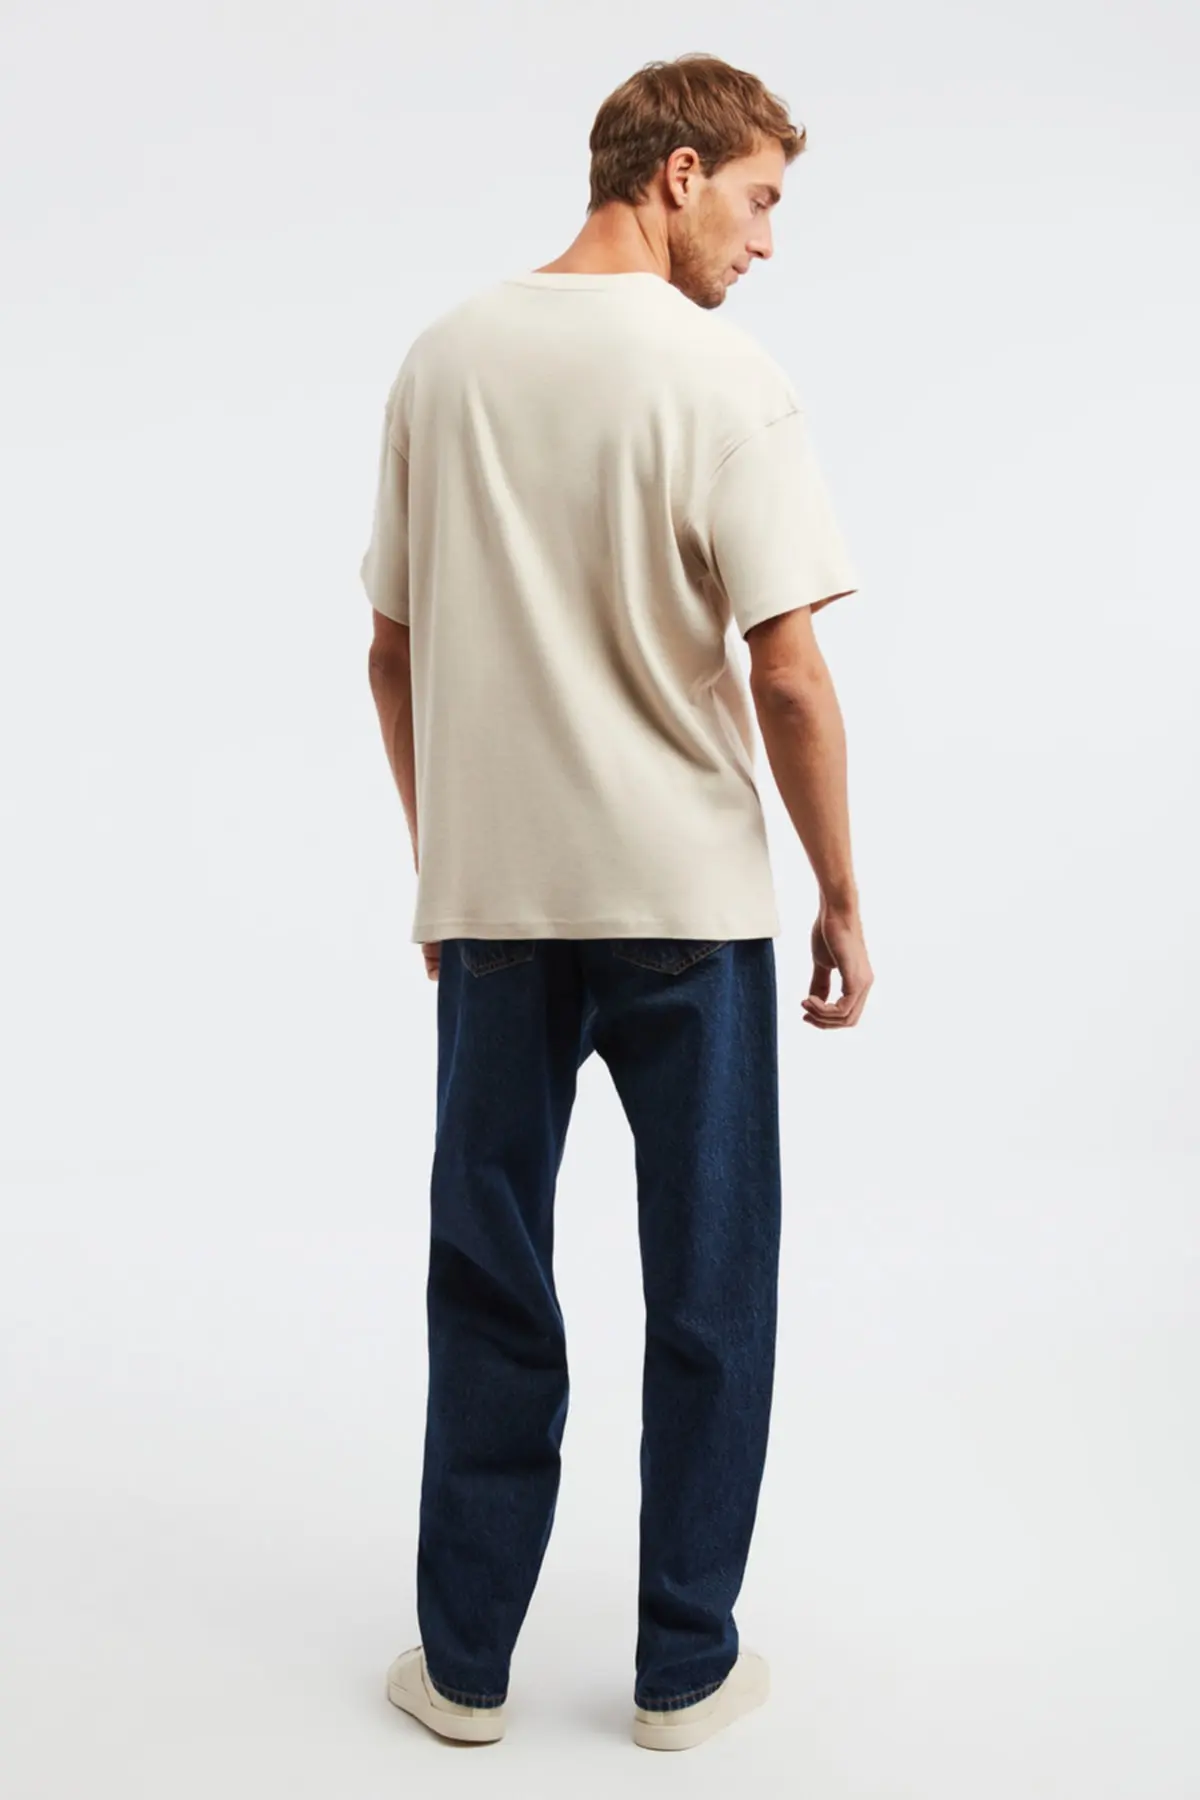 تیشرت چاپ دار اور سایز مردانه بژ برند GRIMELANGE 